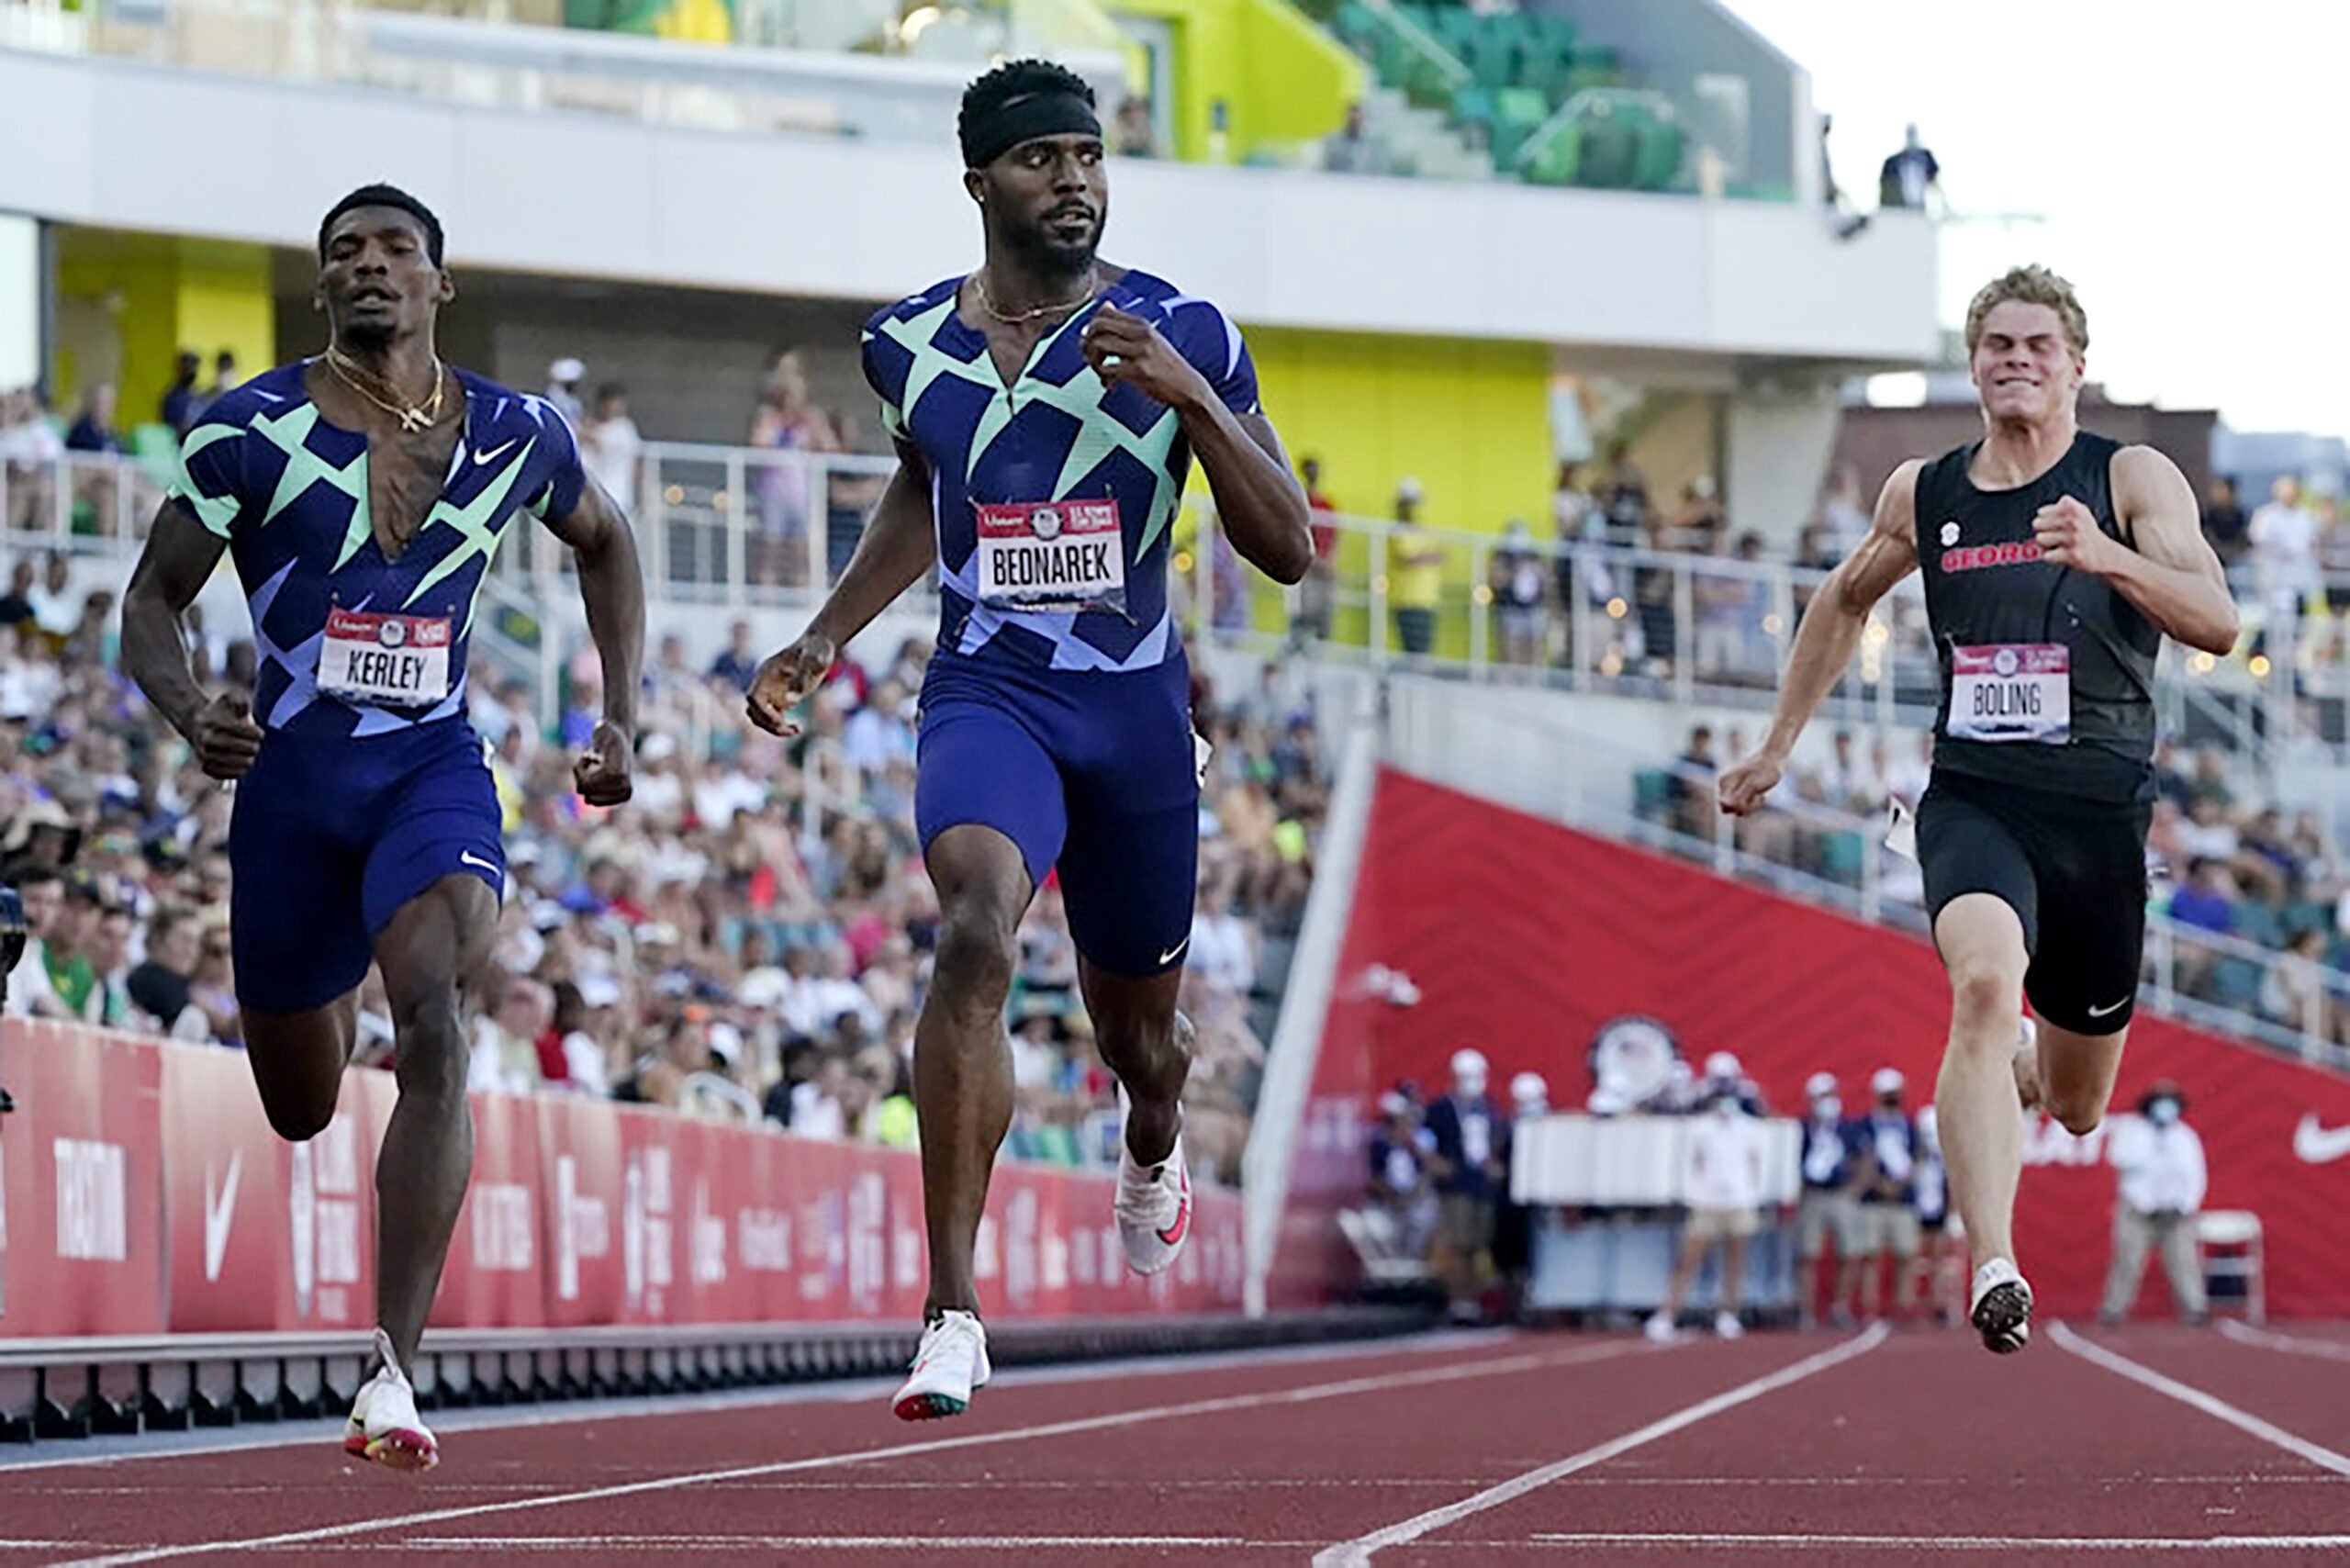 Three men race in a 200-meter dash